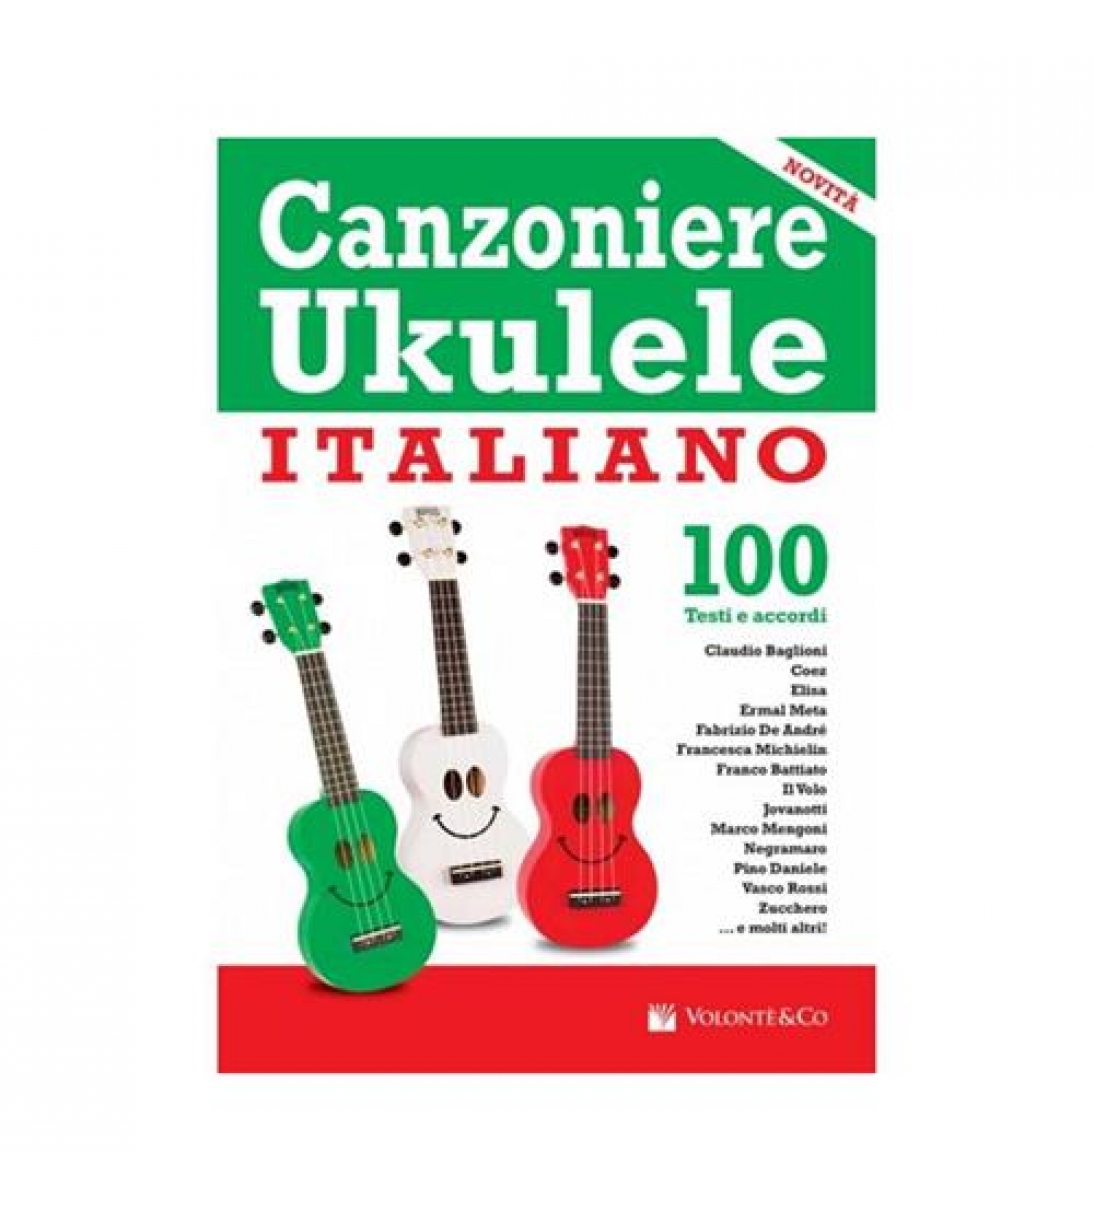 Canzoniere ukulele italiano